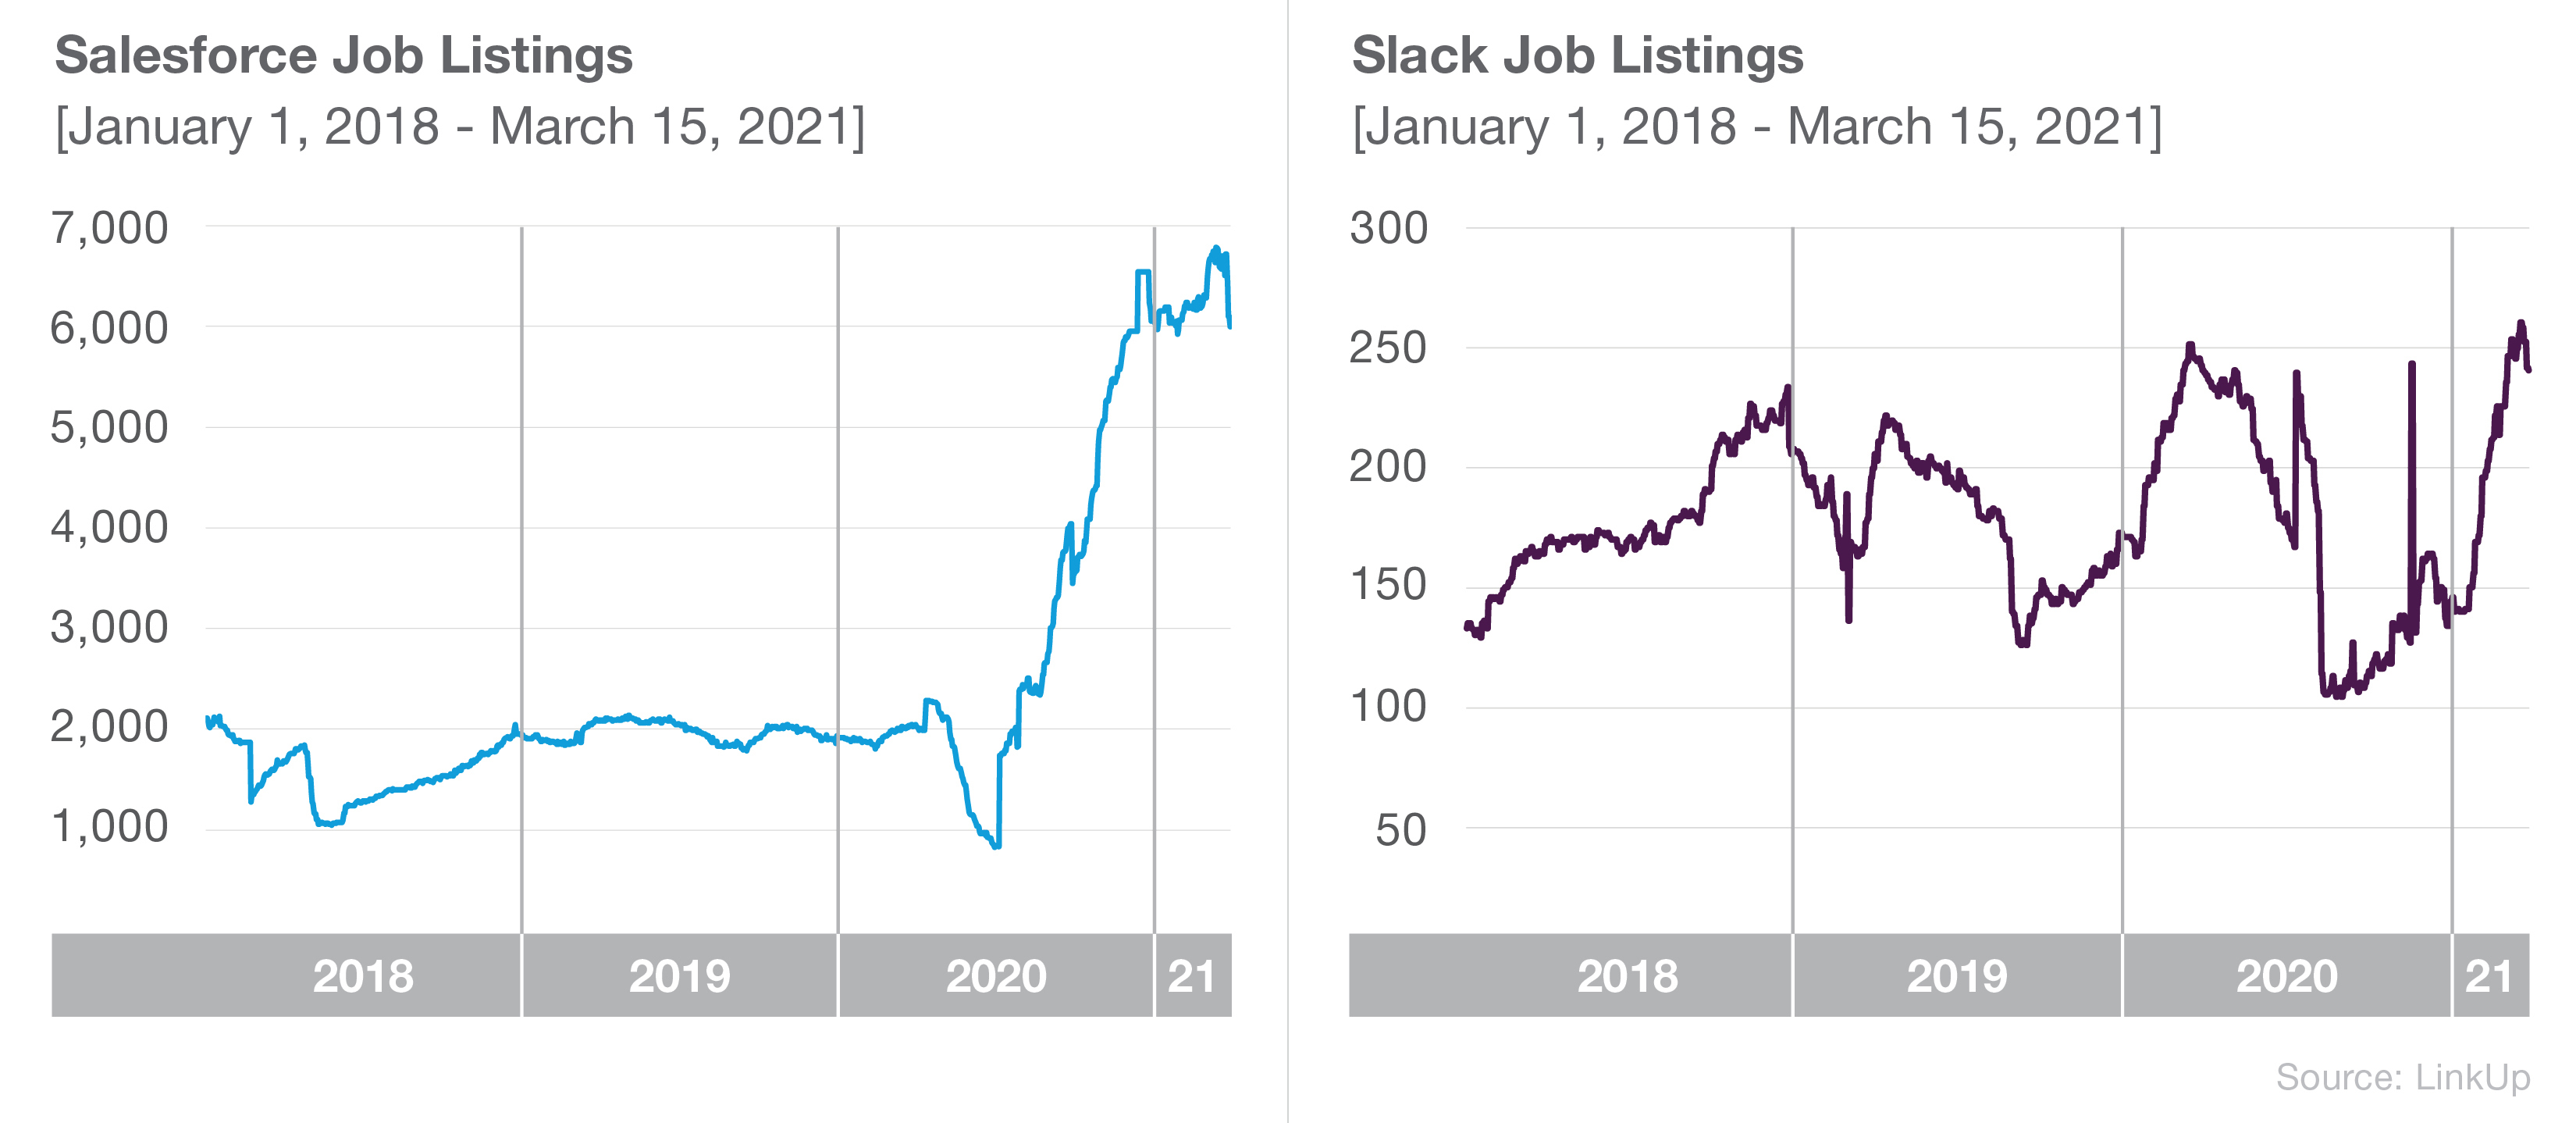 Salesforce Job Listings and Slack Job Listings 1018 to March 2021